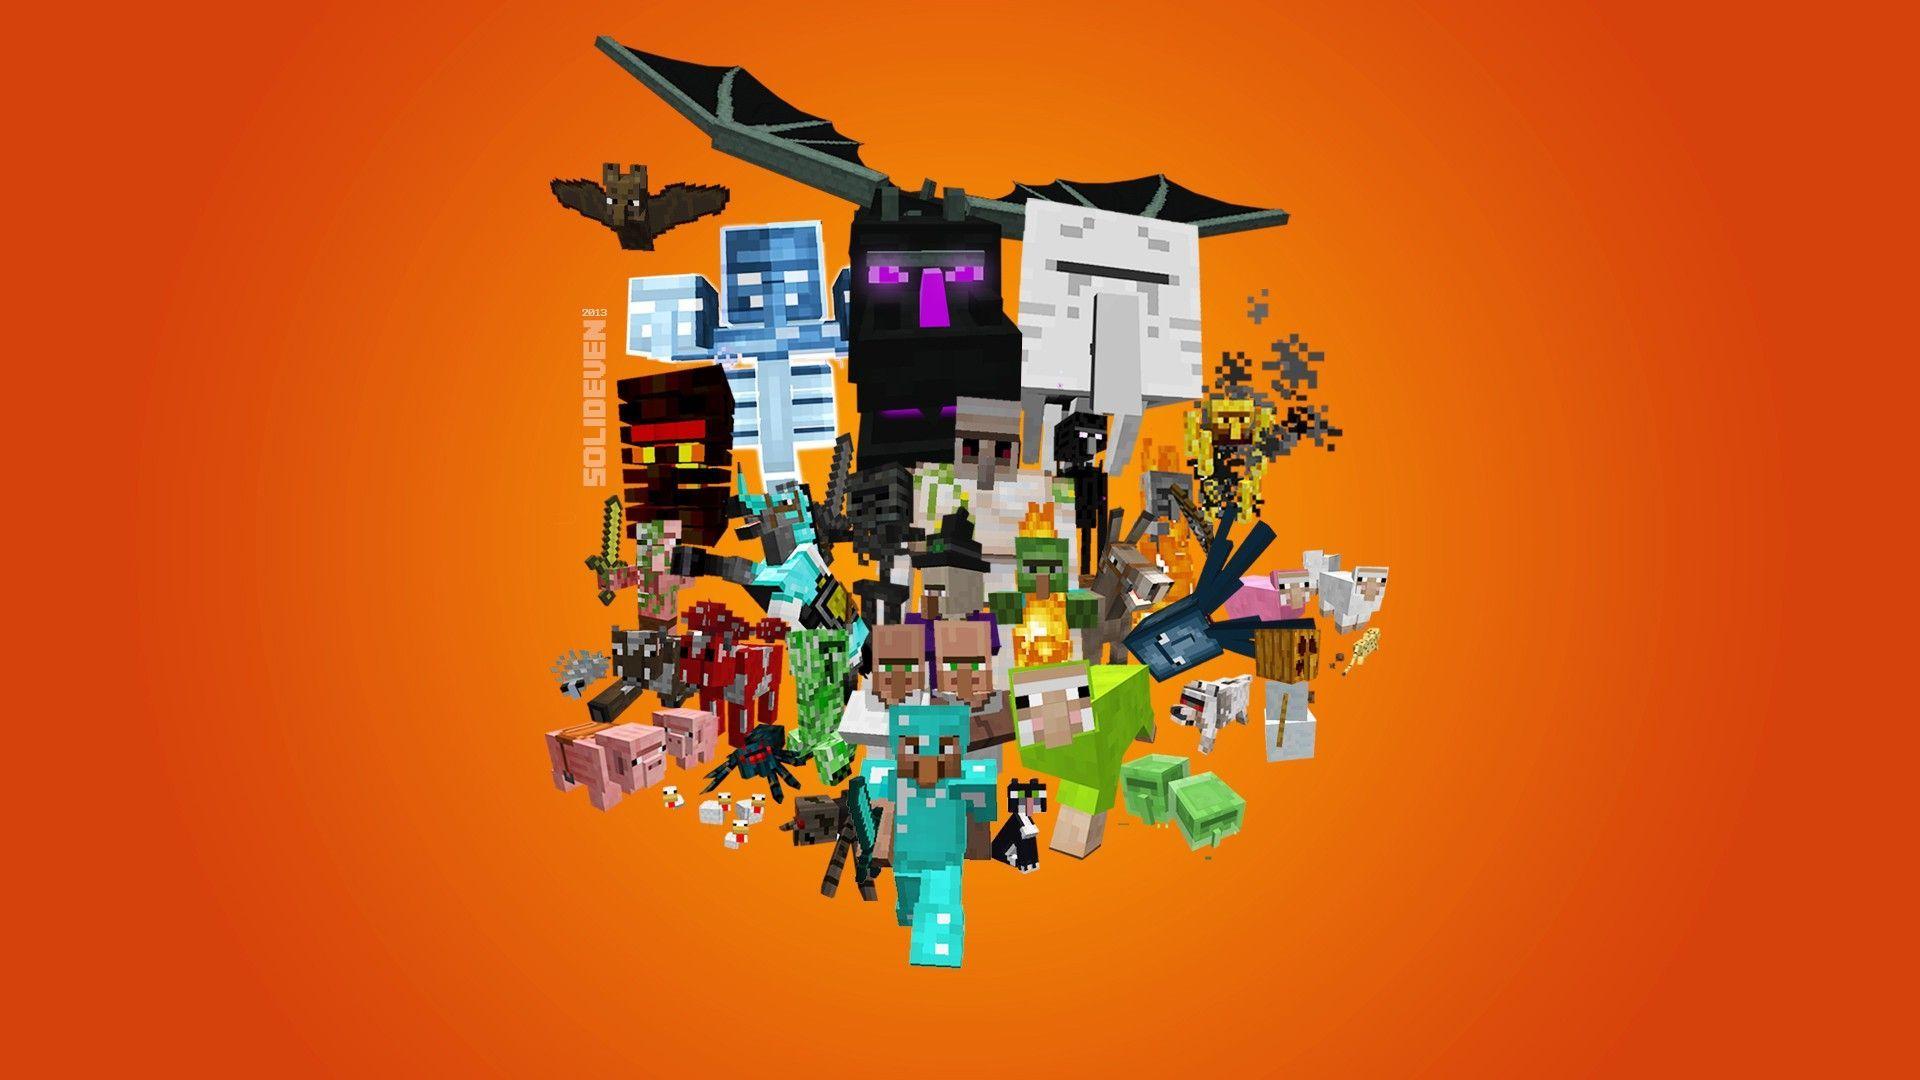 Minecraft Desktop Wallpaper, image collections of wallpaper